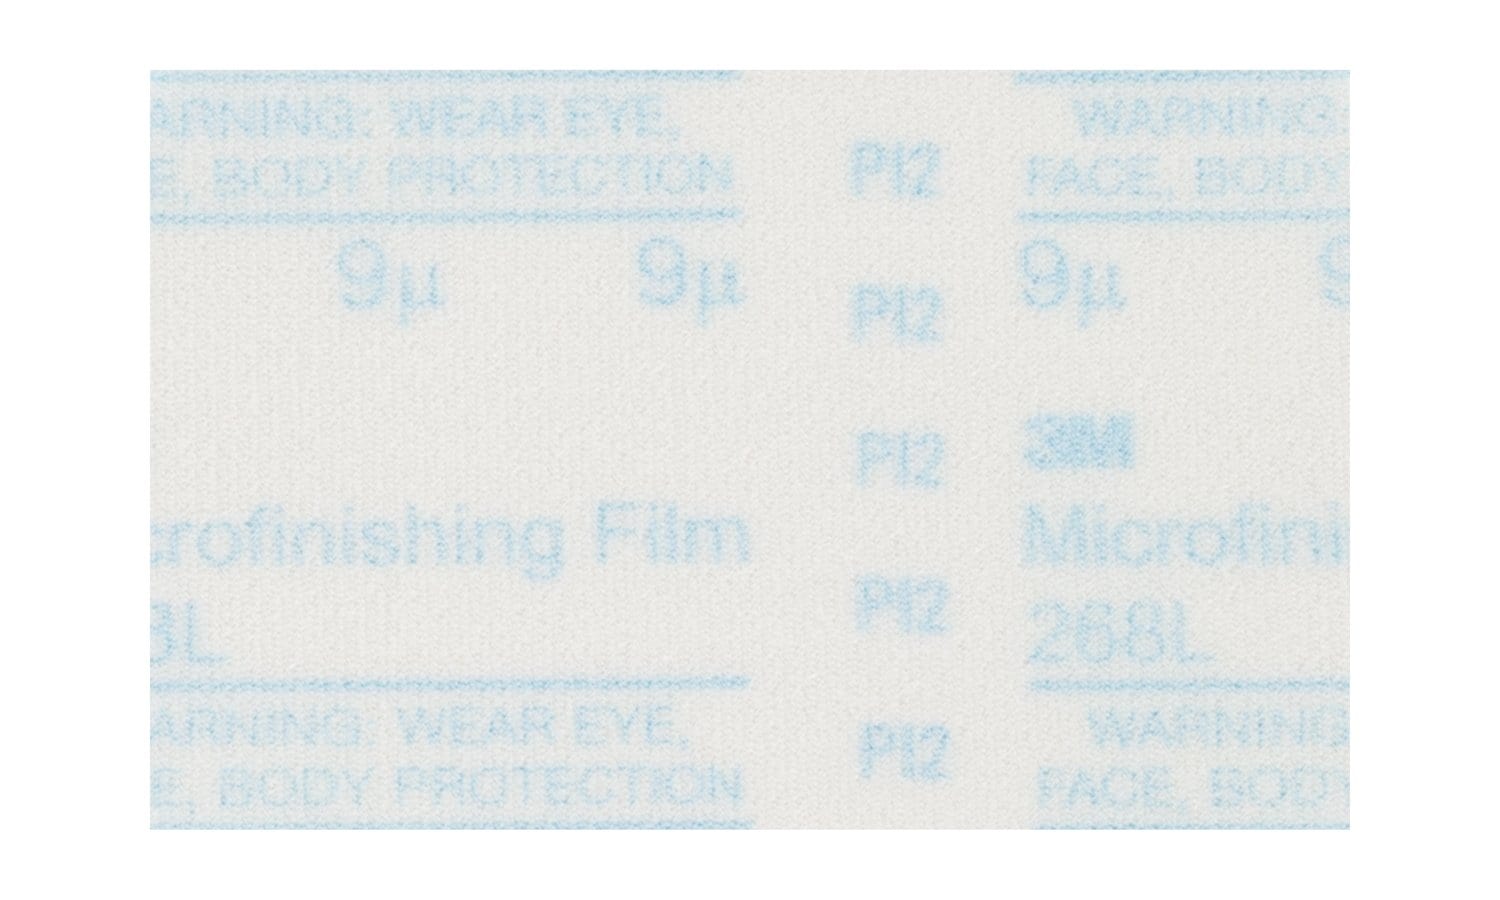 7100046246 - 3M Microfinishing PSA Film Sheet 268L, 60 Mic, Type D, Config